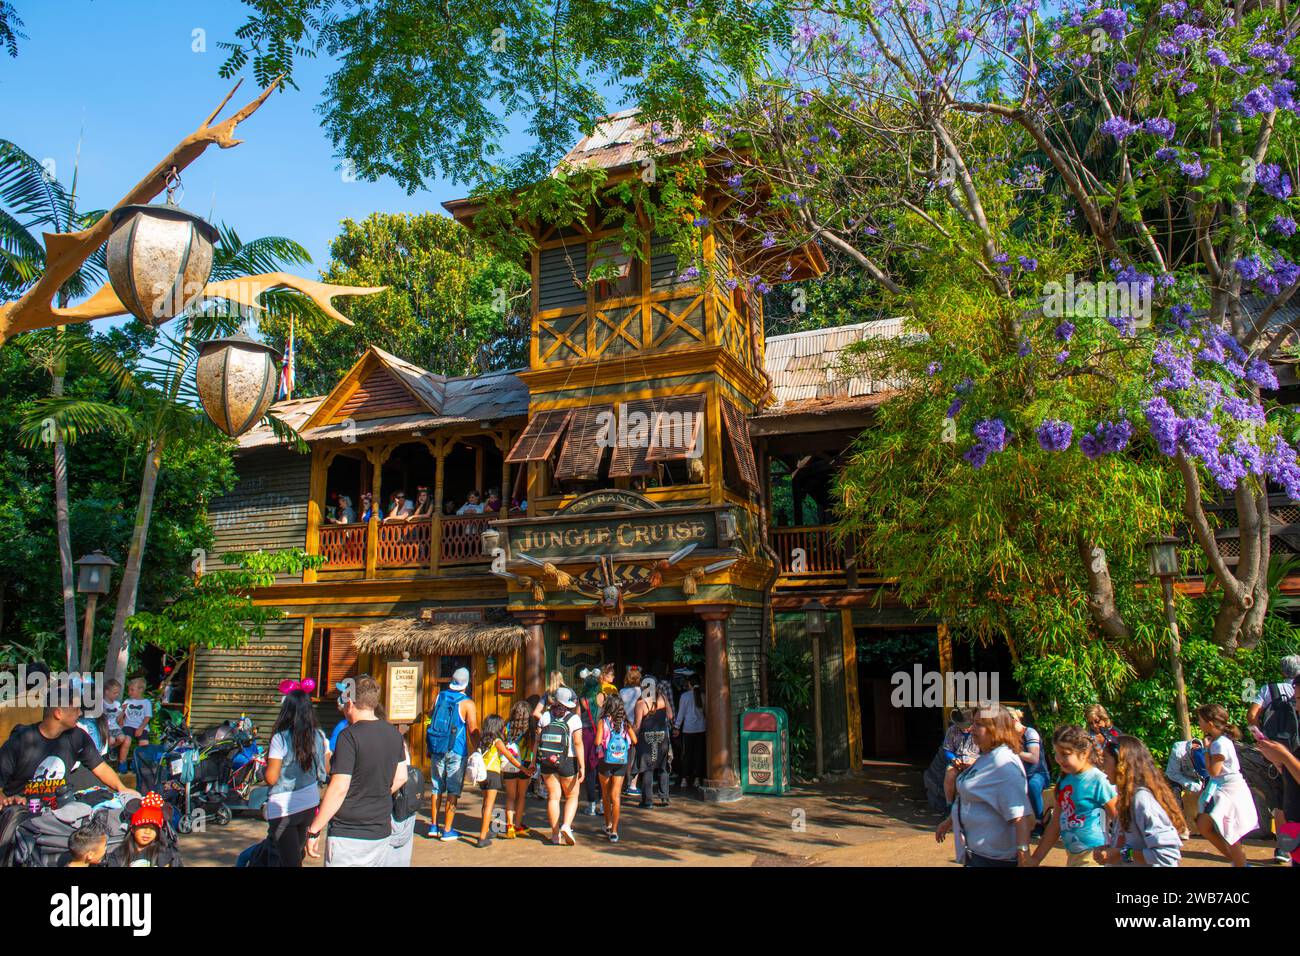 Jungle Cruise building at Adventureland in Disneyland Park in Anaheim, California CA, USA. Stock Photo